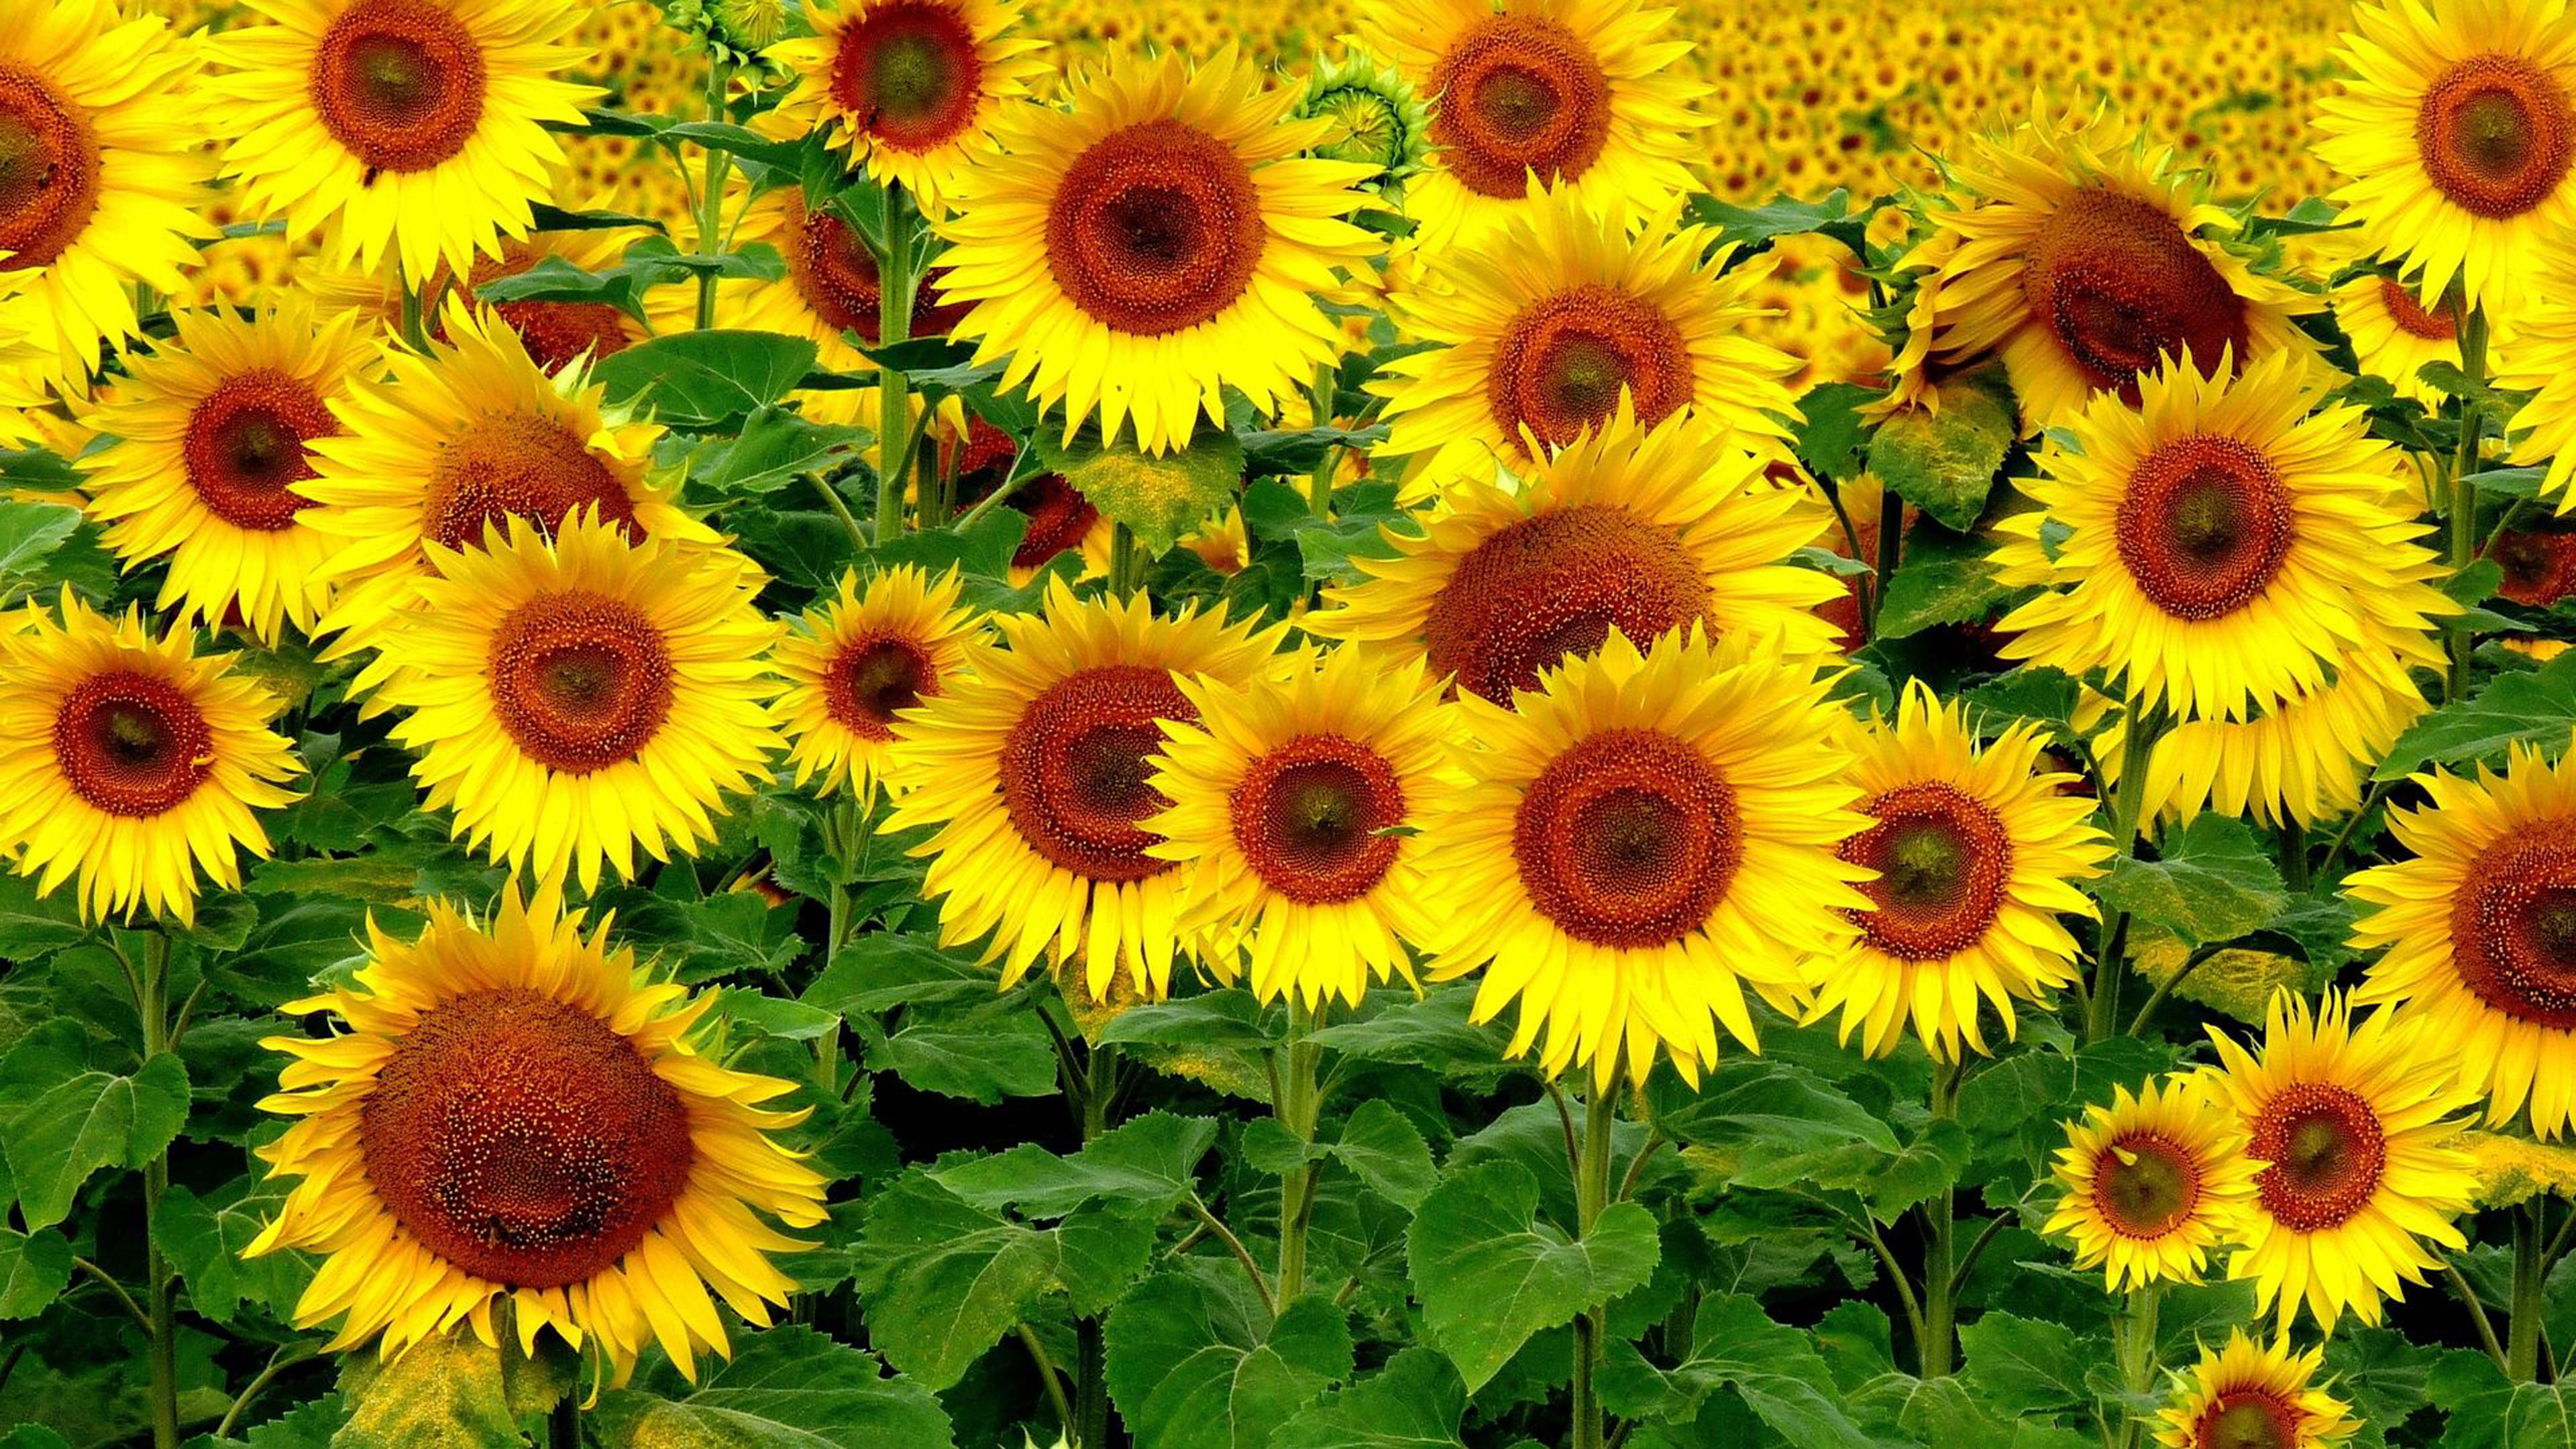 Sunflower Beautiful Yellow Flowers 4k Ultra Hd Wallpapers For Desktop